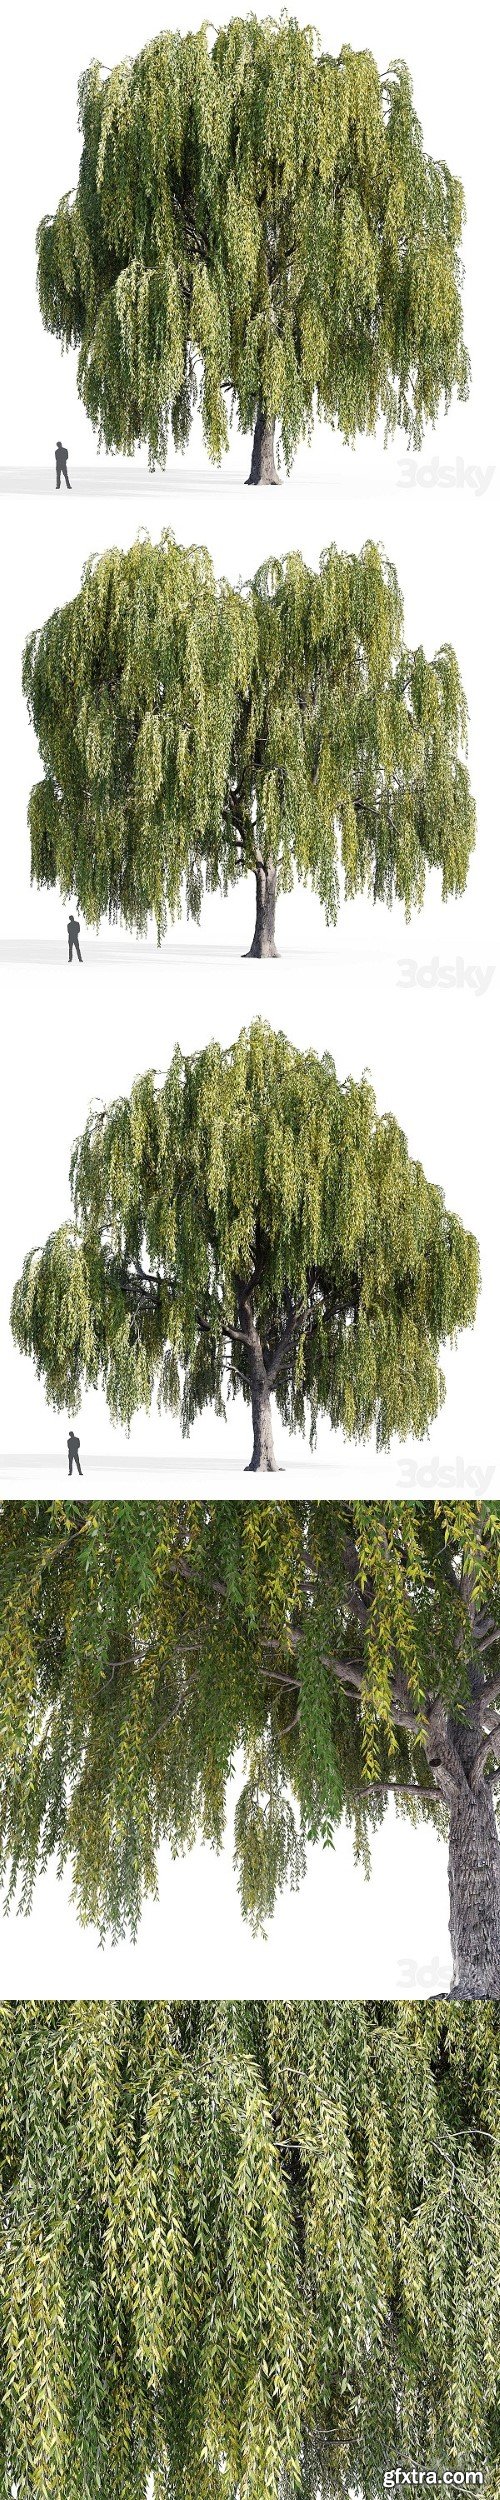 Willow Salix Willow